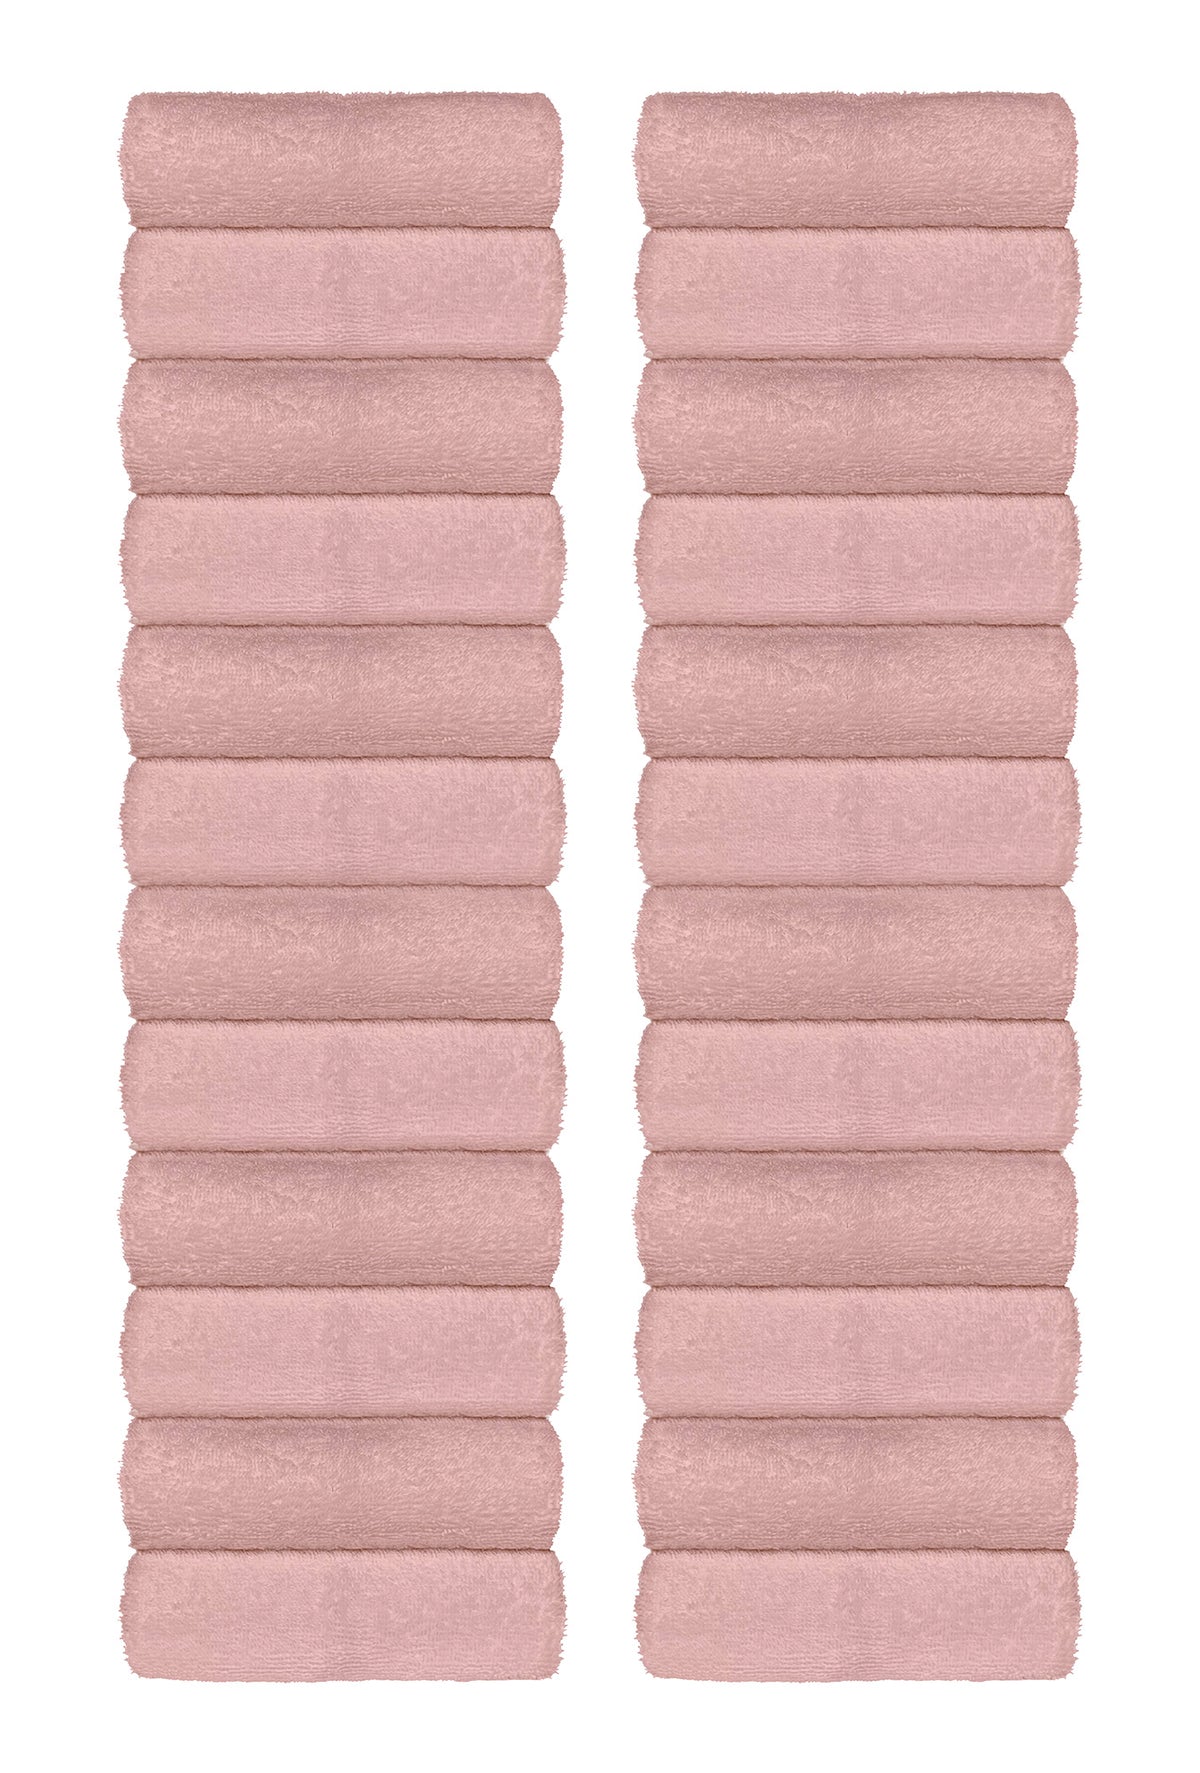 Set Asciugamani Bagno 100% Cotone Super Assorbenti Telo Doccia Spugna Professionali Salvietta Lavetta Viso Asciugamano Teli Asciugamano - Rosa